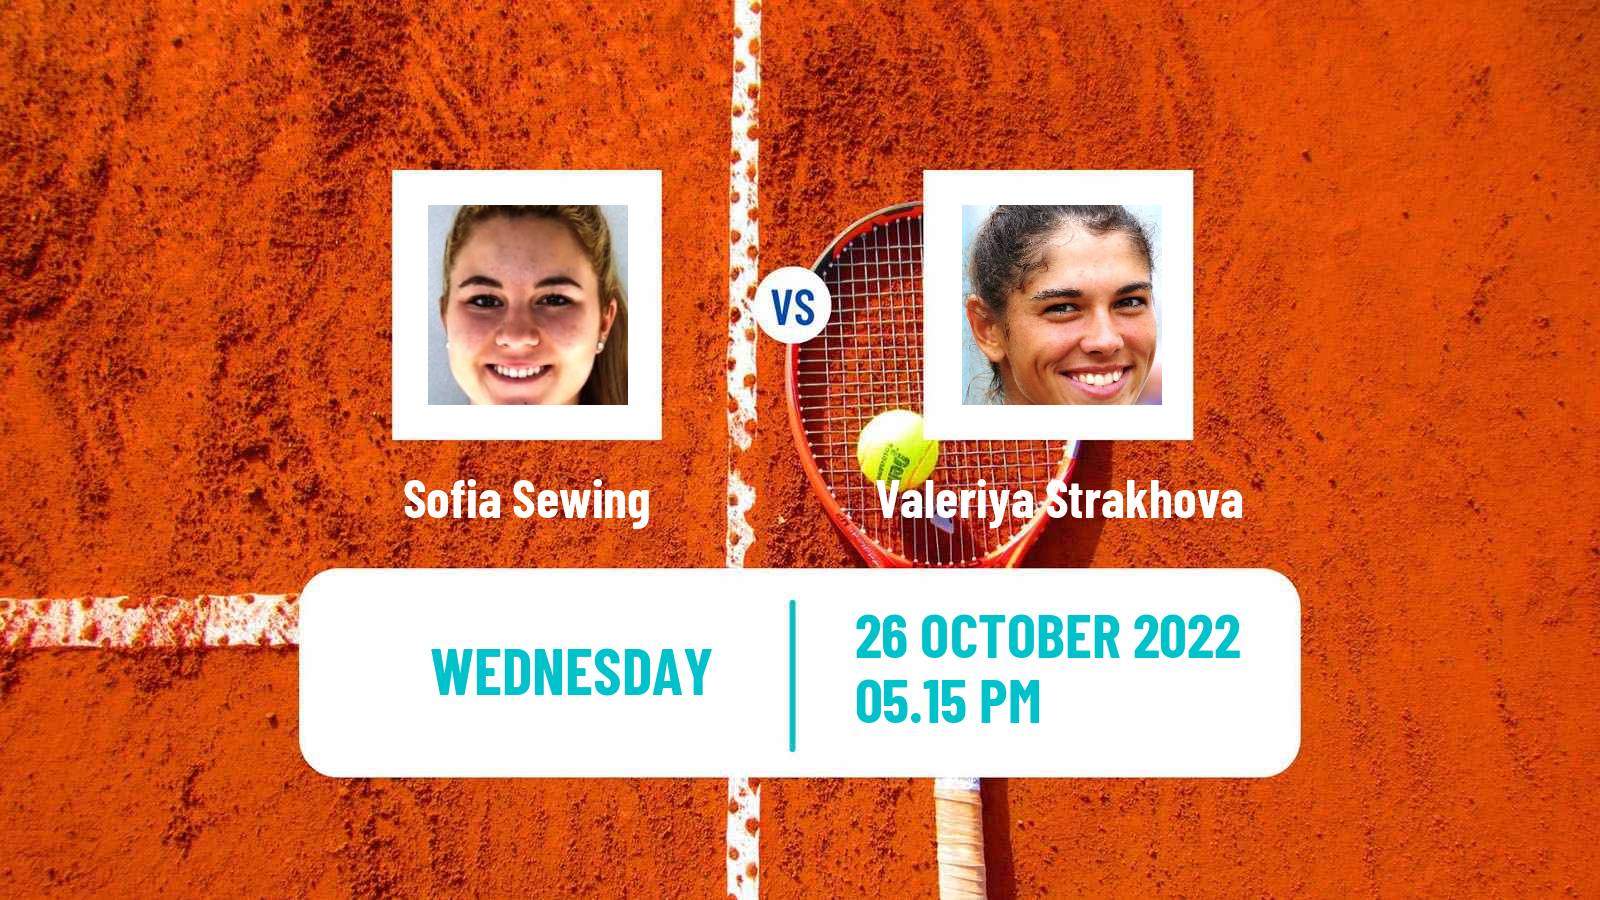 Tennis ITF Tournaments Sofia Sewing - Valeriya Strakhova